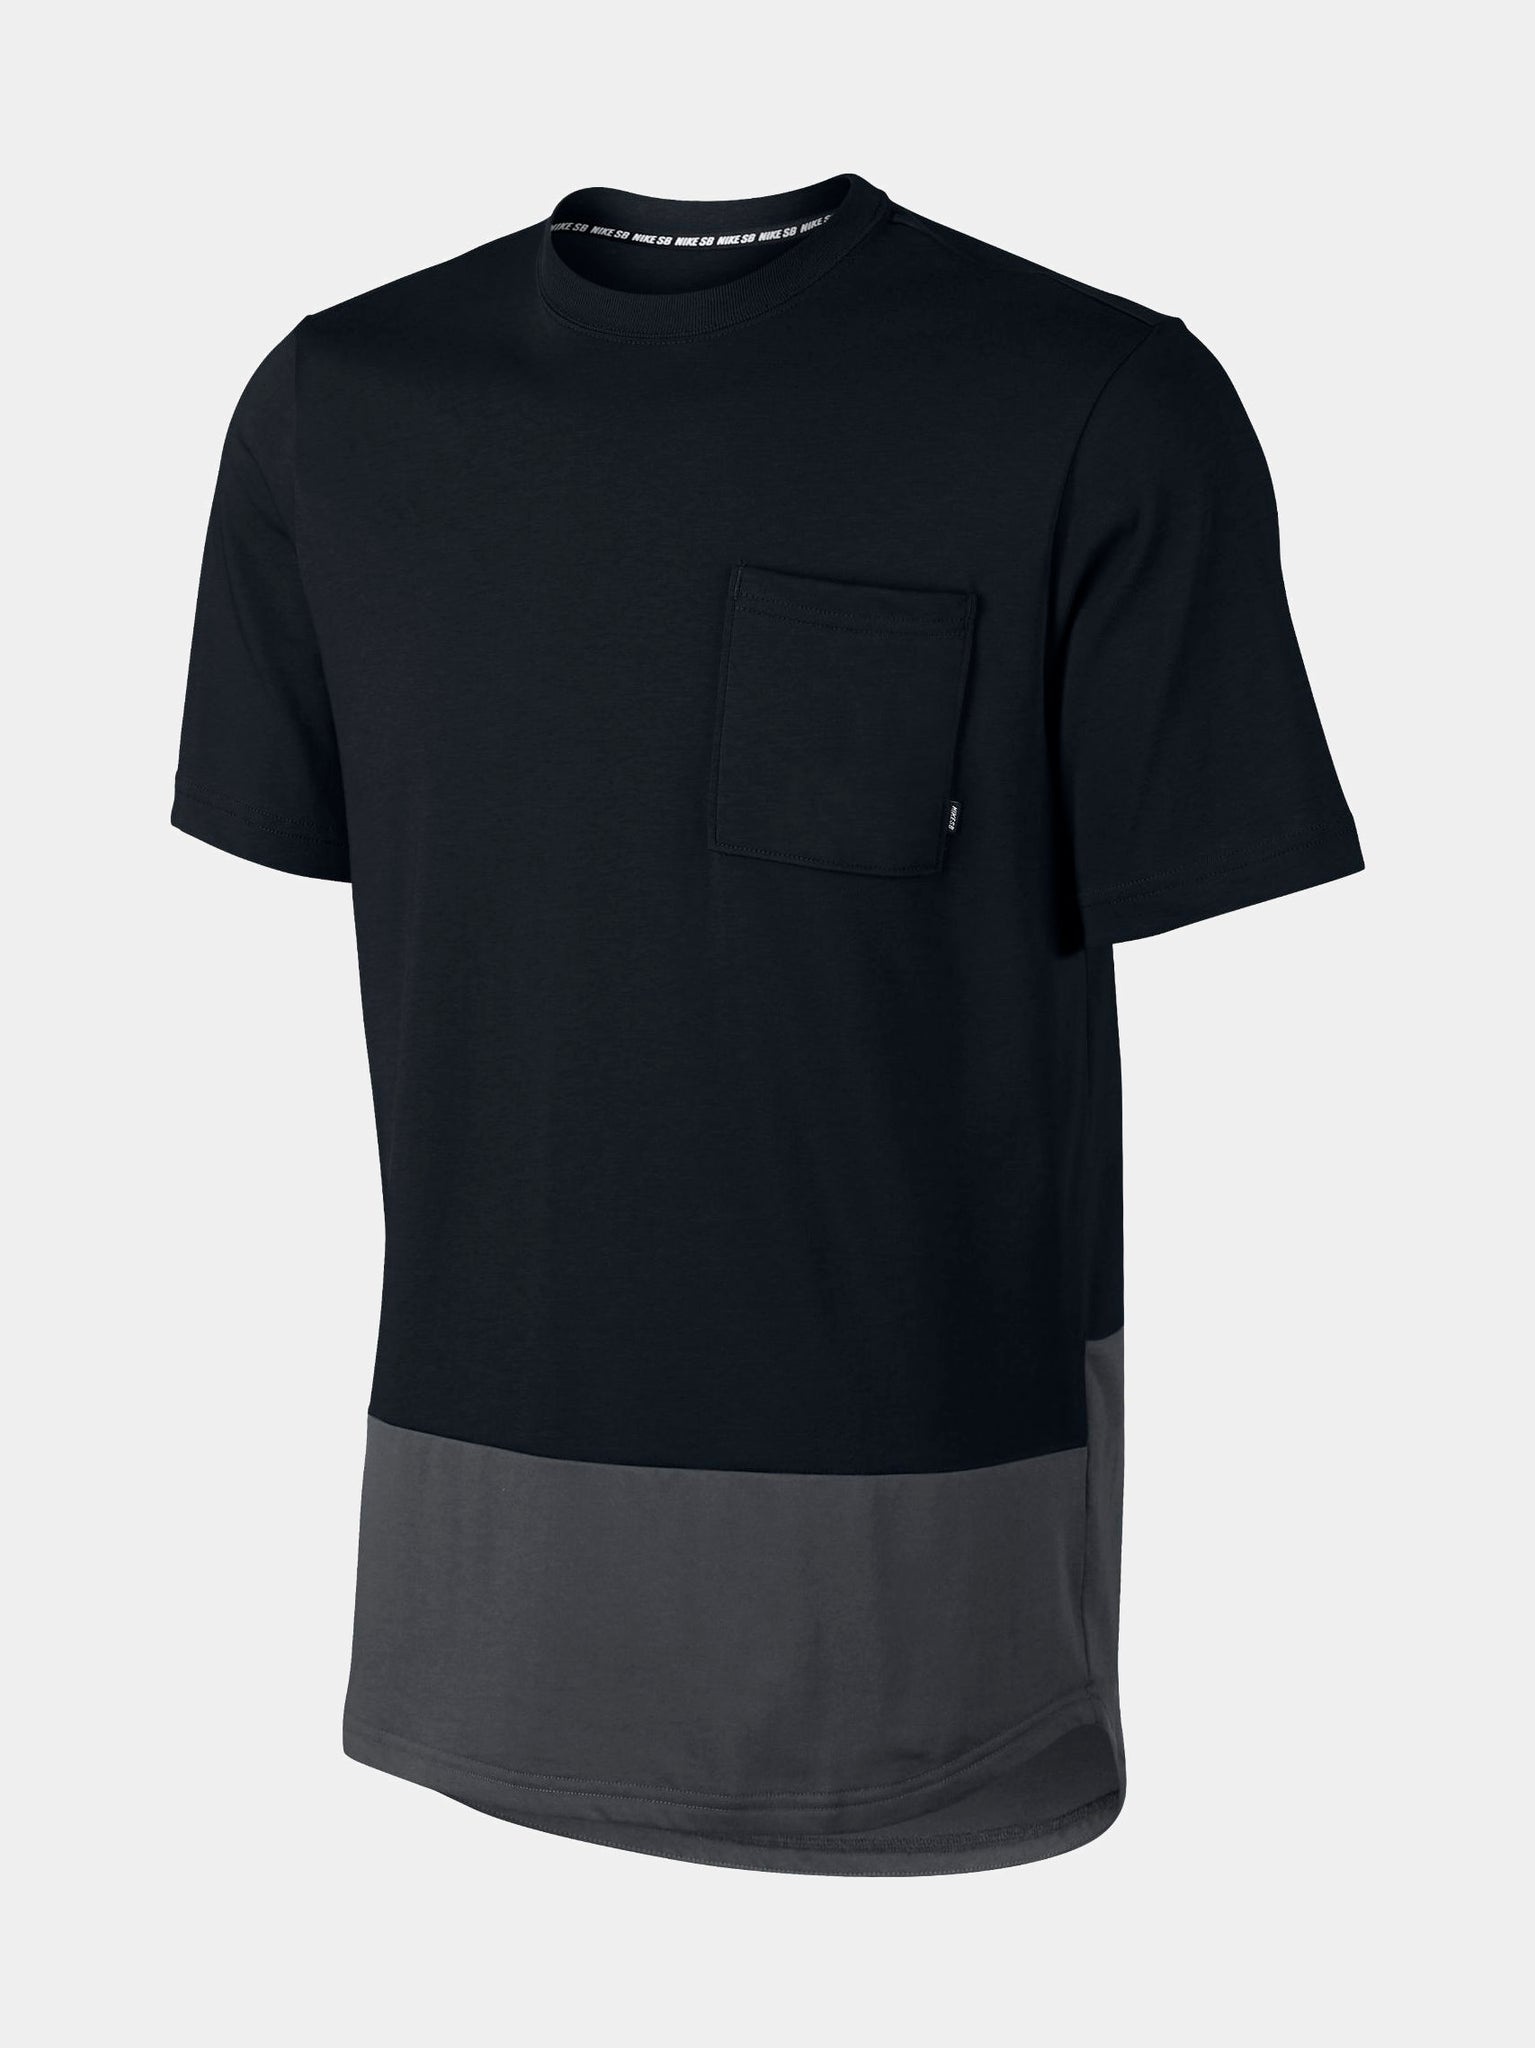 SB Dri Fit Pocket Mens T-Shirt (Black)